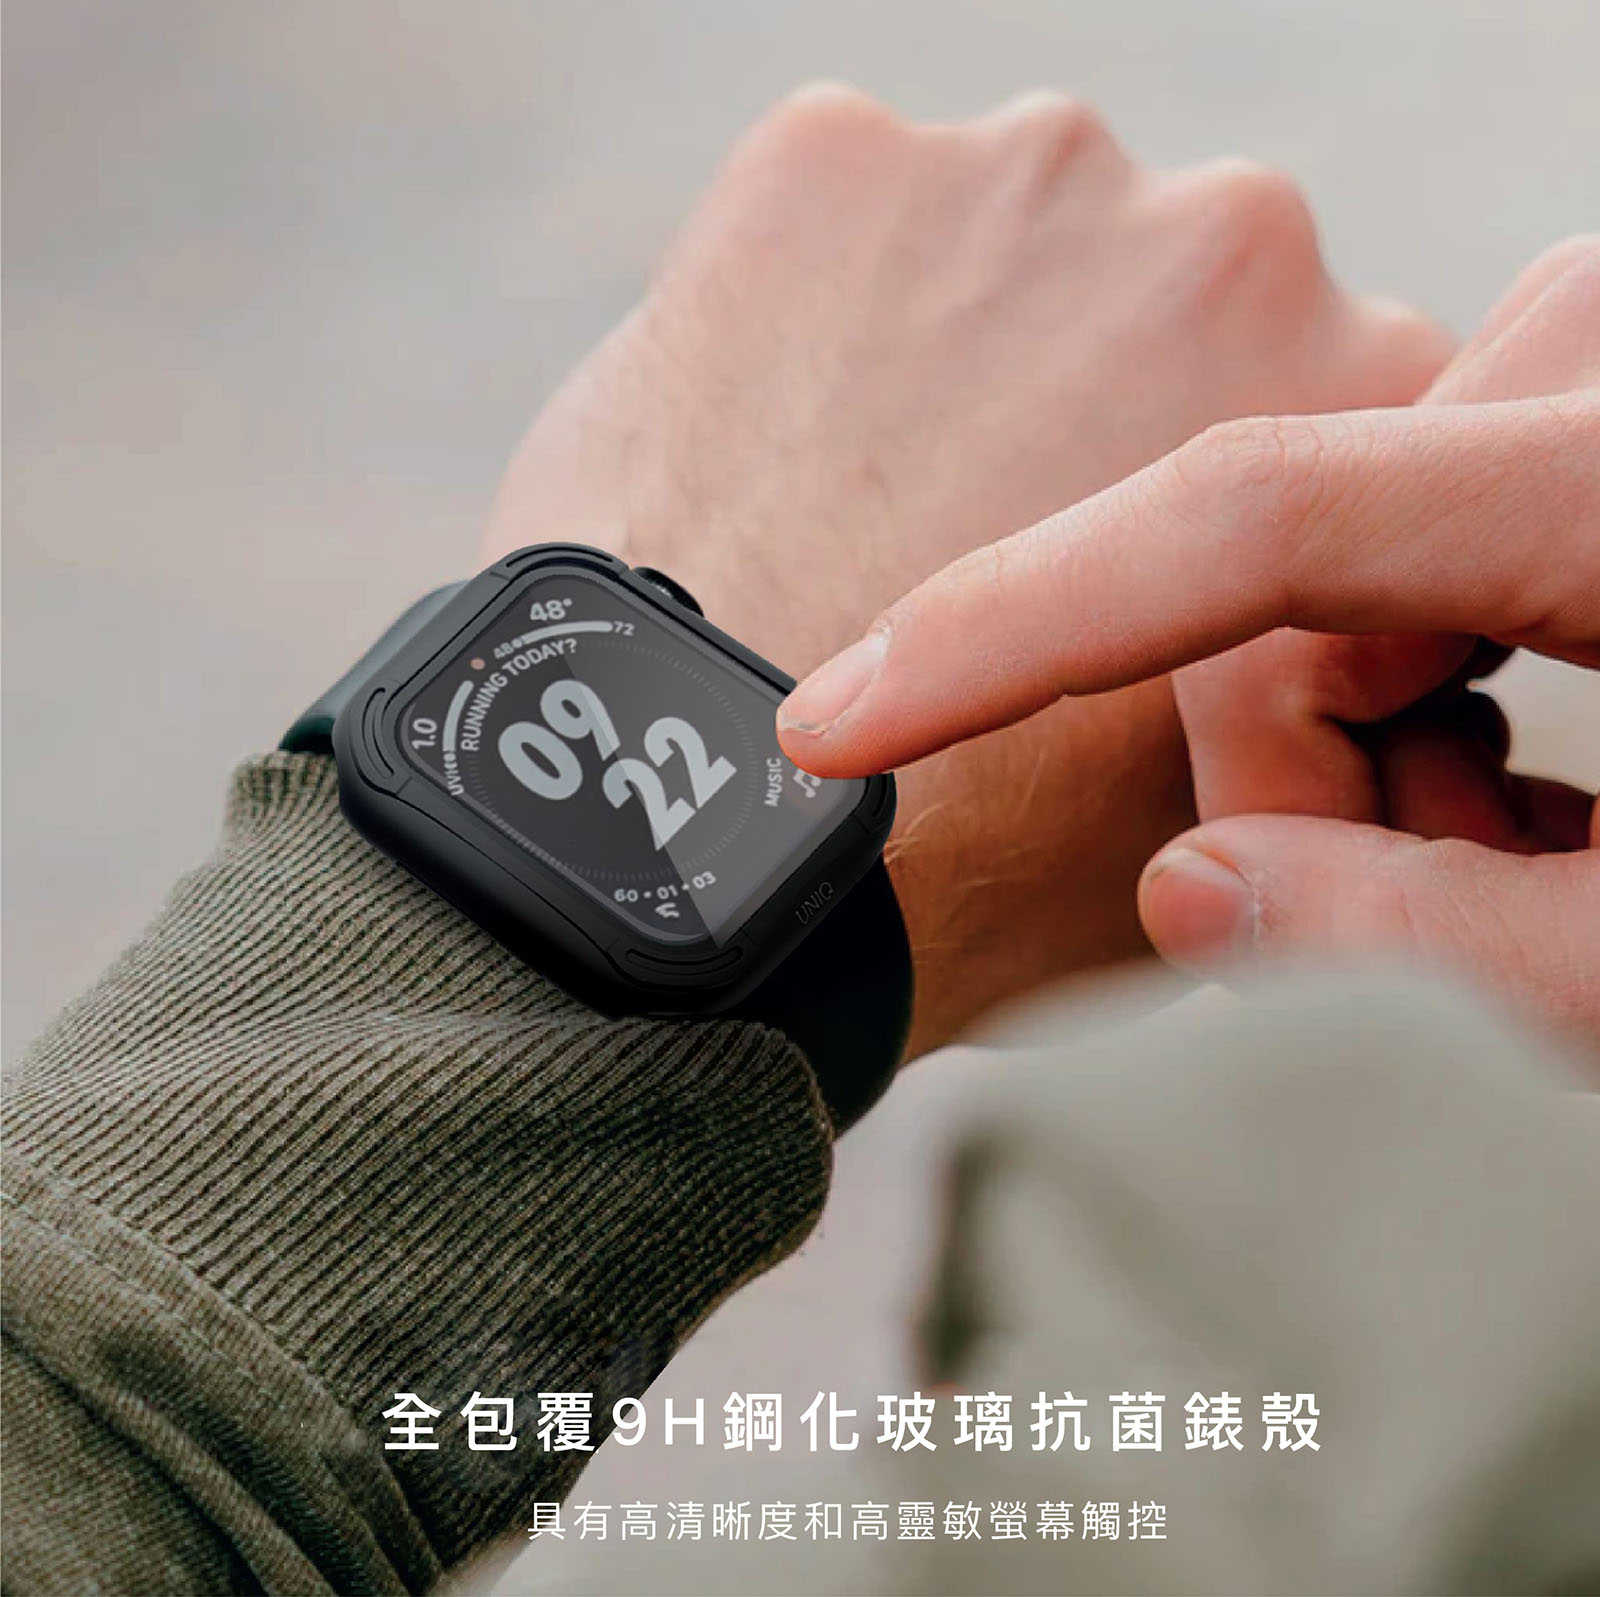 Apple Watch 全包覆9H鋼化玻璃抗菌殼 UNIQ Torres 透明玻璃殼 抗菌抗泛黃| 劈飛好物